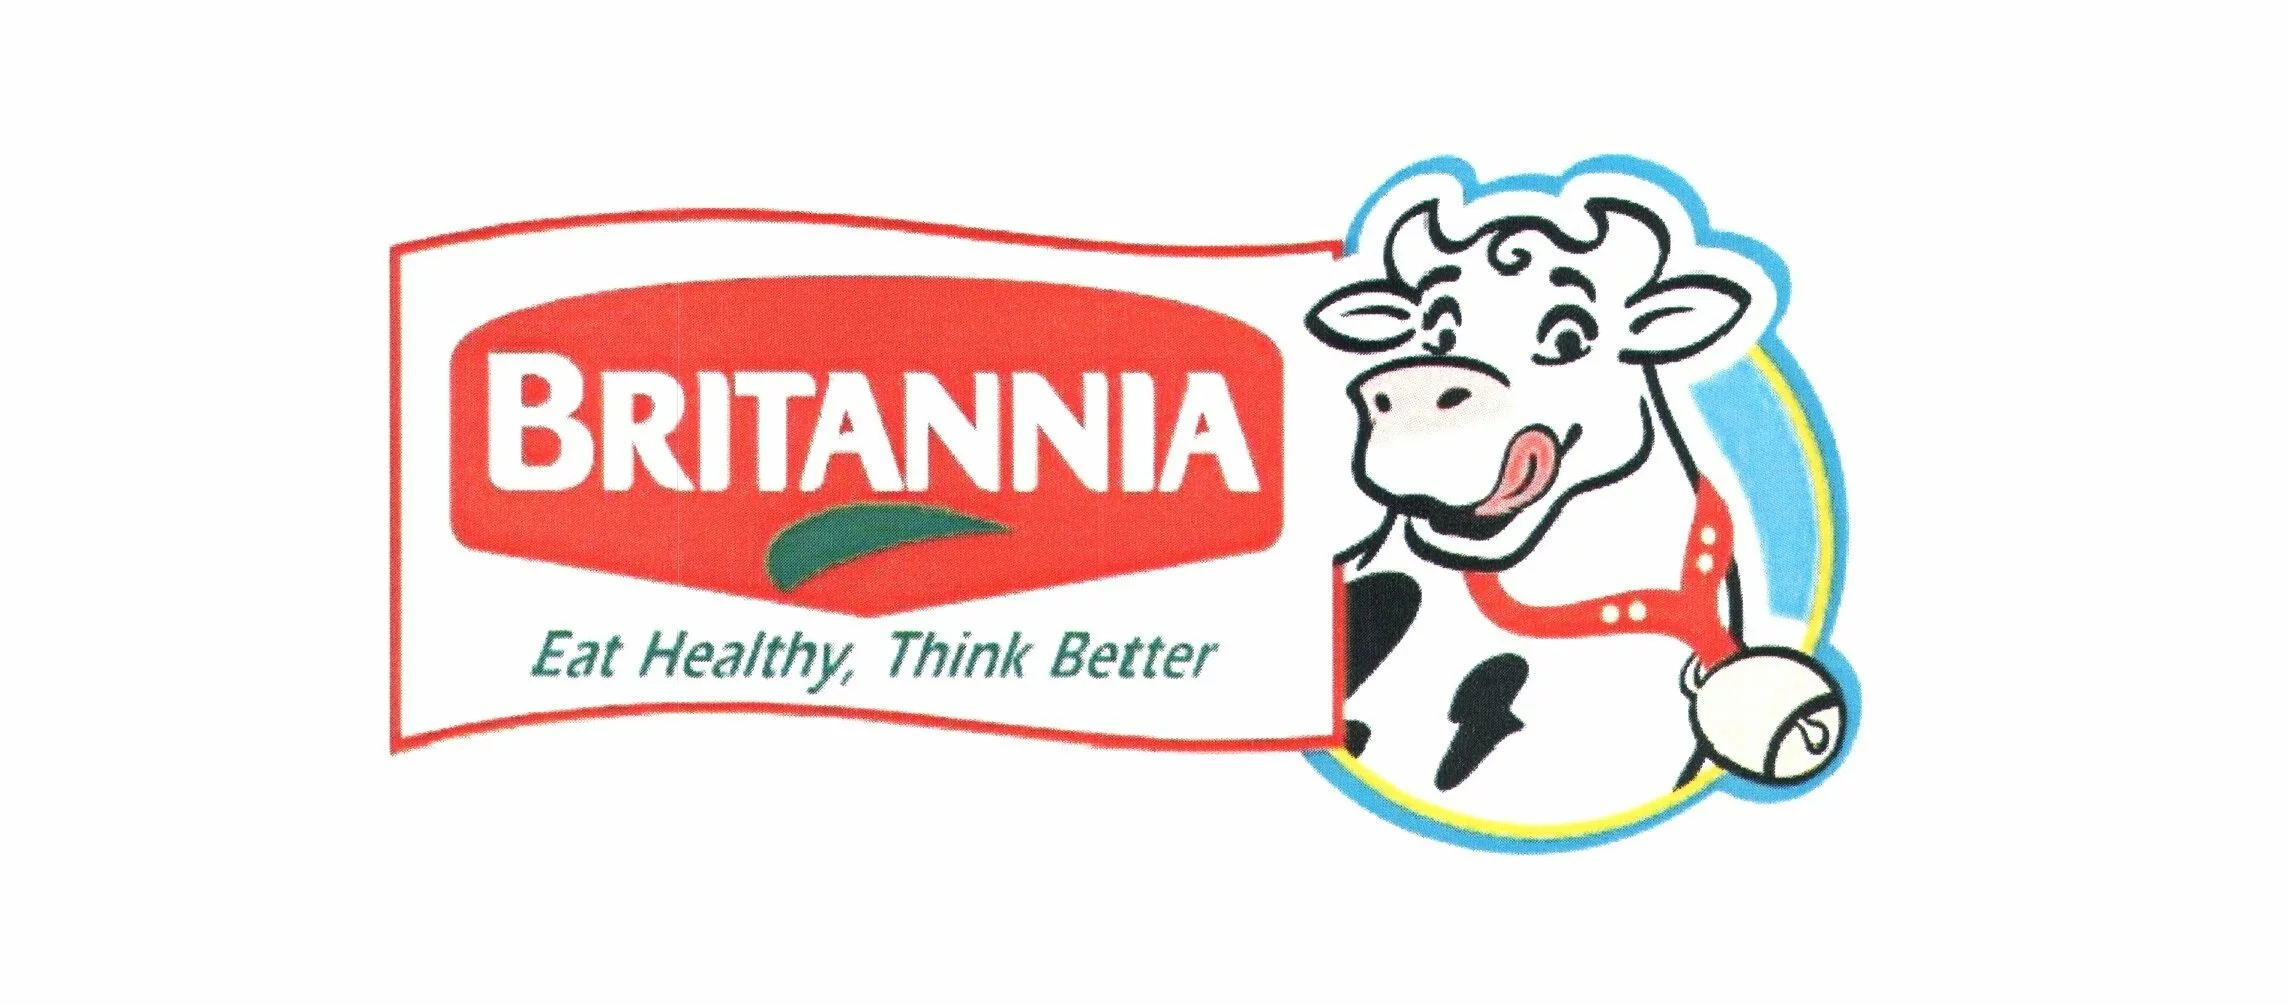 Britannia dairy products